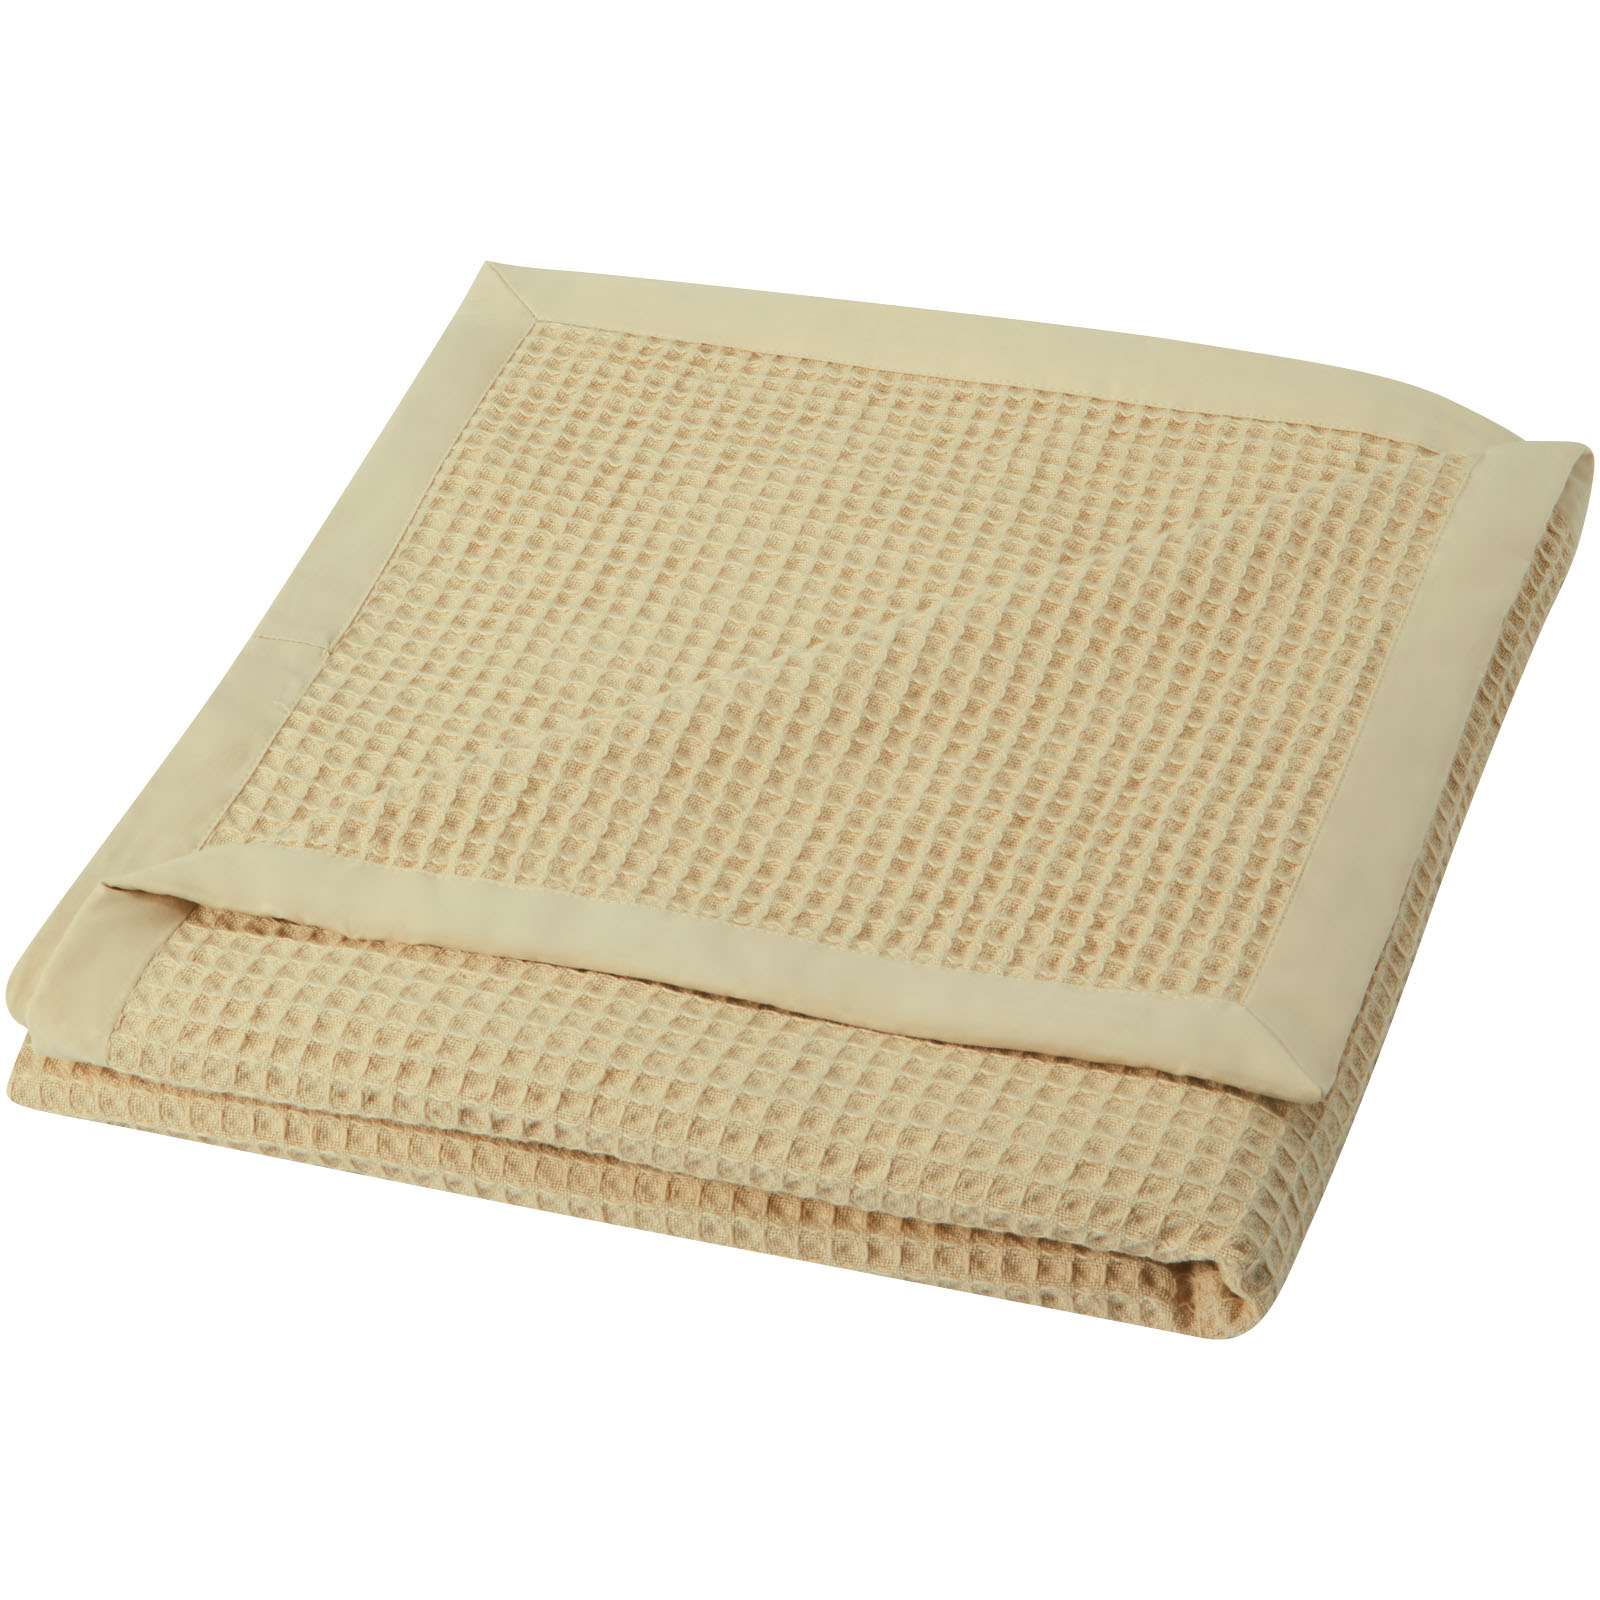 Advertising Blankets - Abele 150 x 140 cm cotton waffle blanket